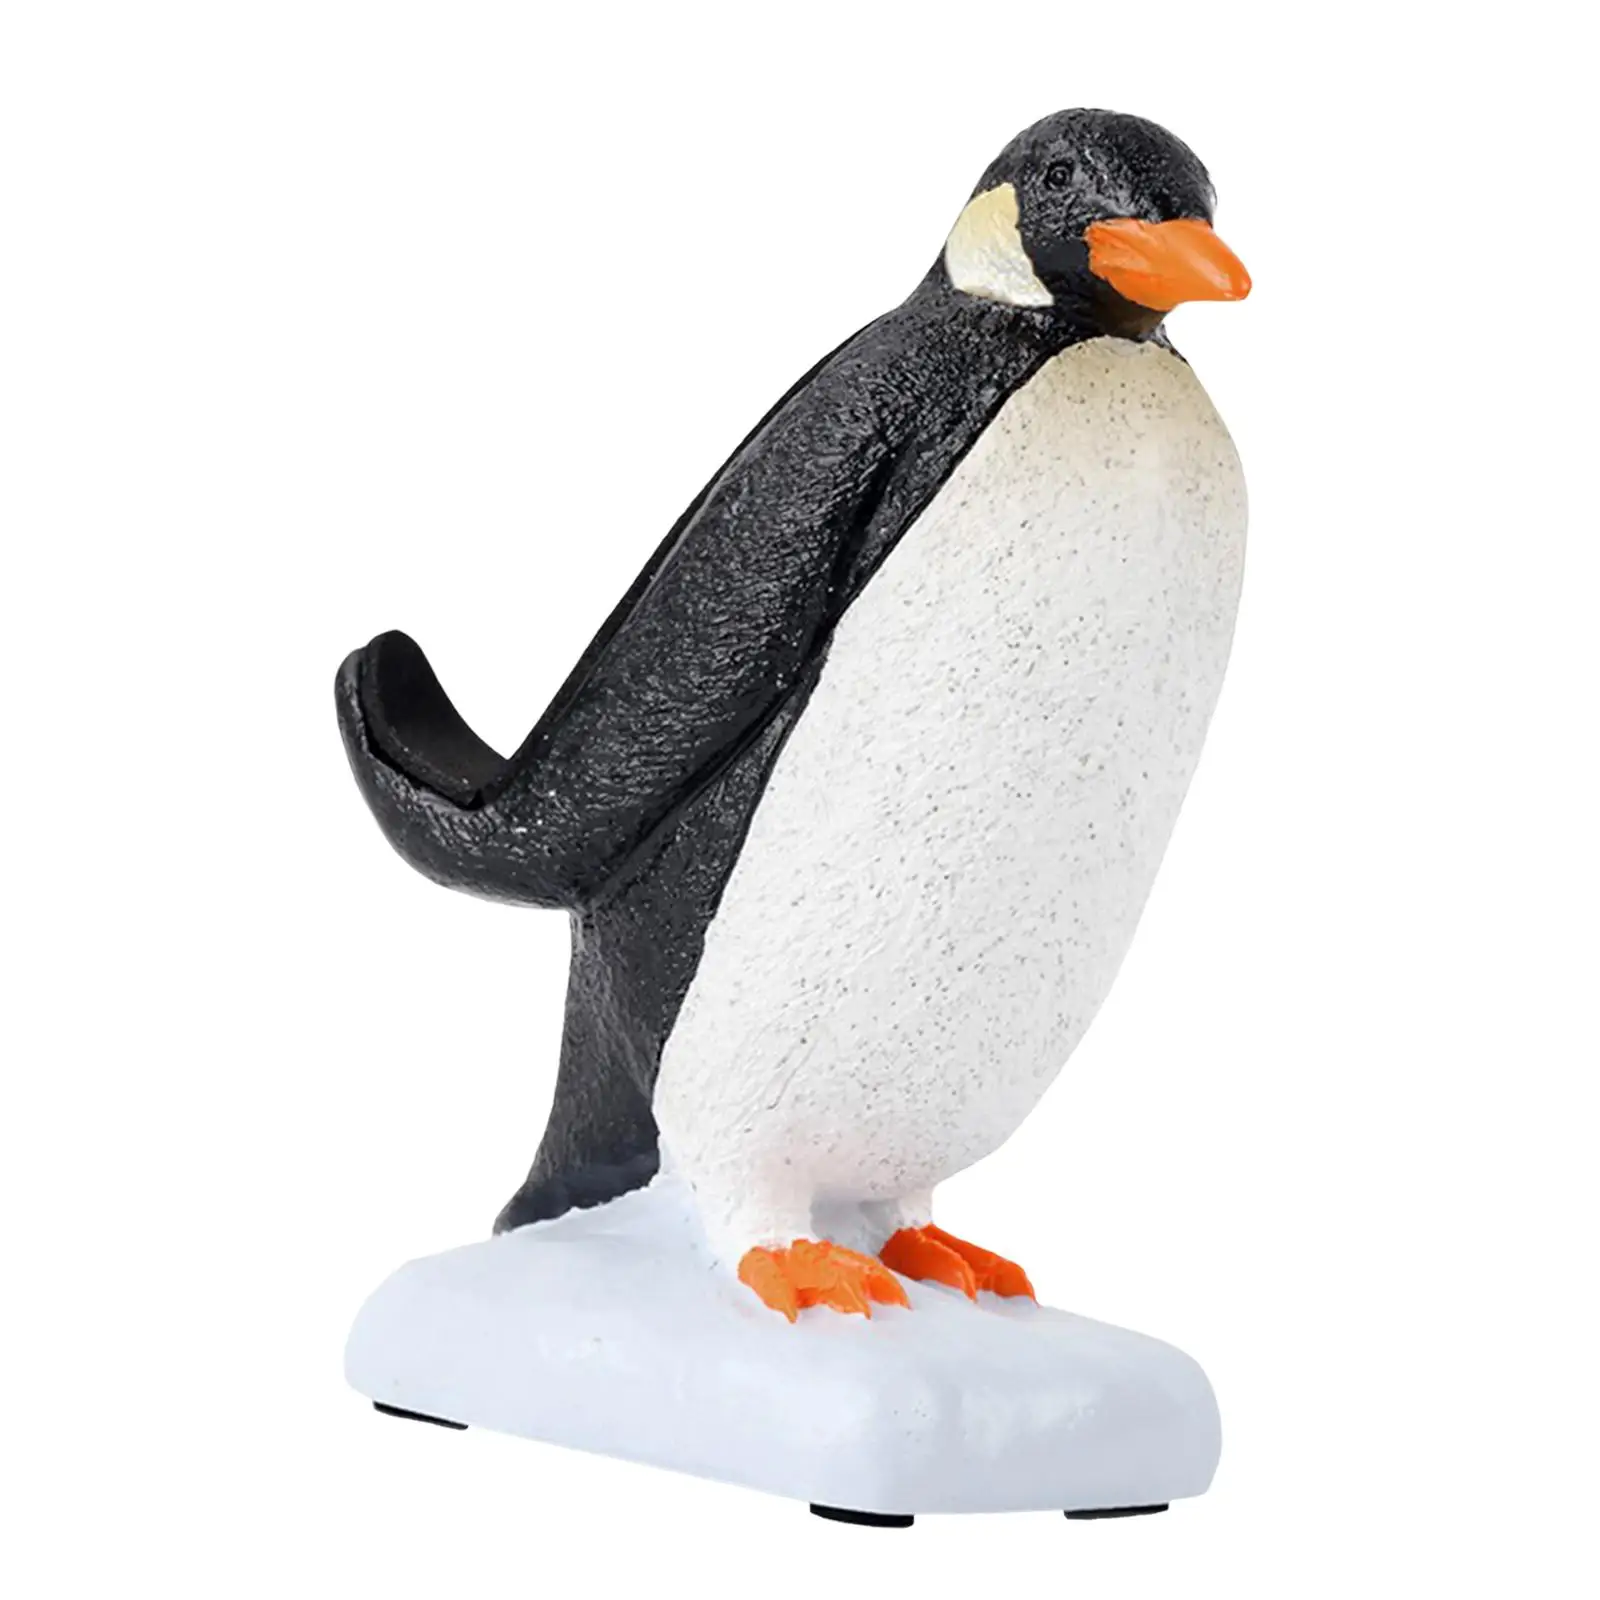 Resin Animal Penguin Statue Desktop Phone Holder Stand Anti Slip Cradle Desktop Figurine Decor Crafts for Office Home Travel